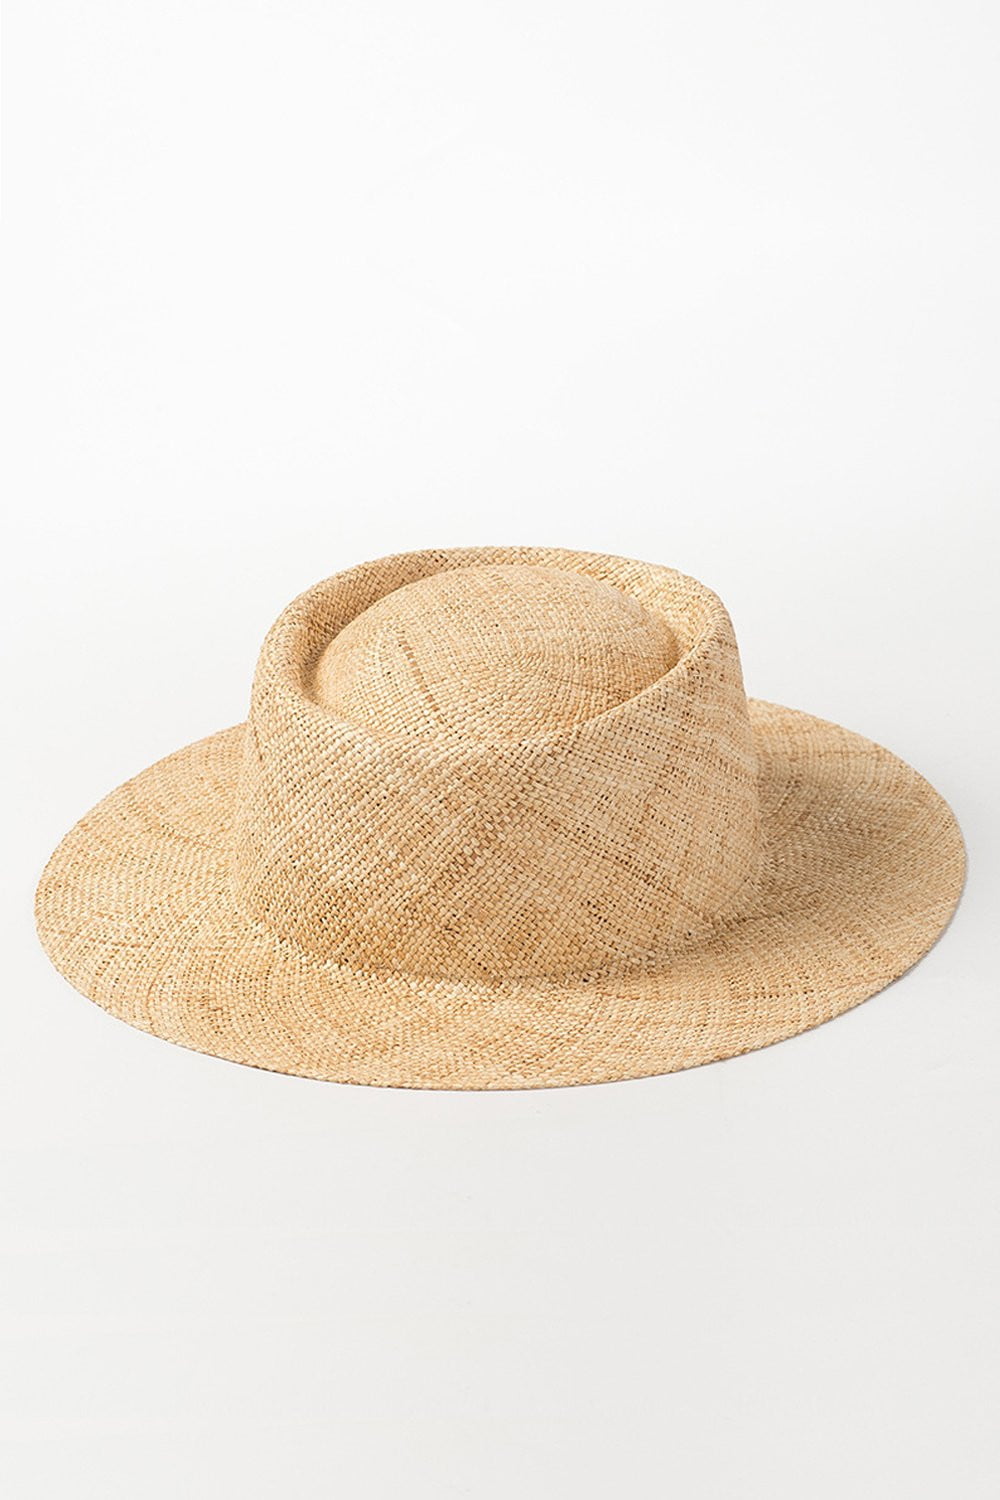 Bao Straw Boster Hat (2207889981499)